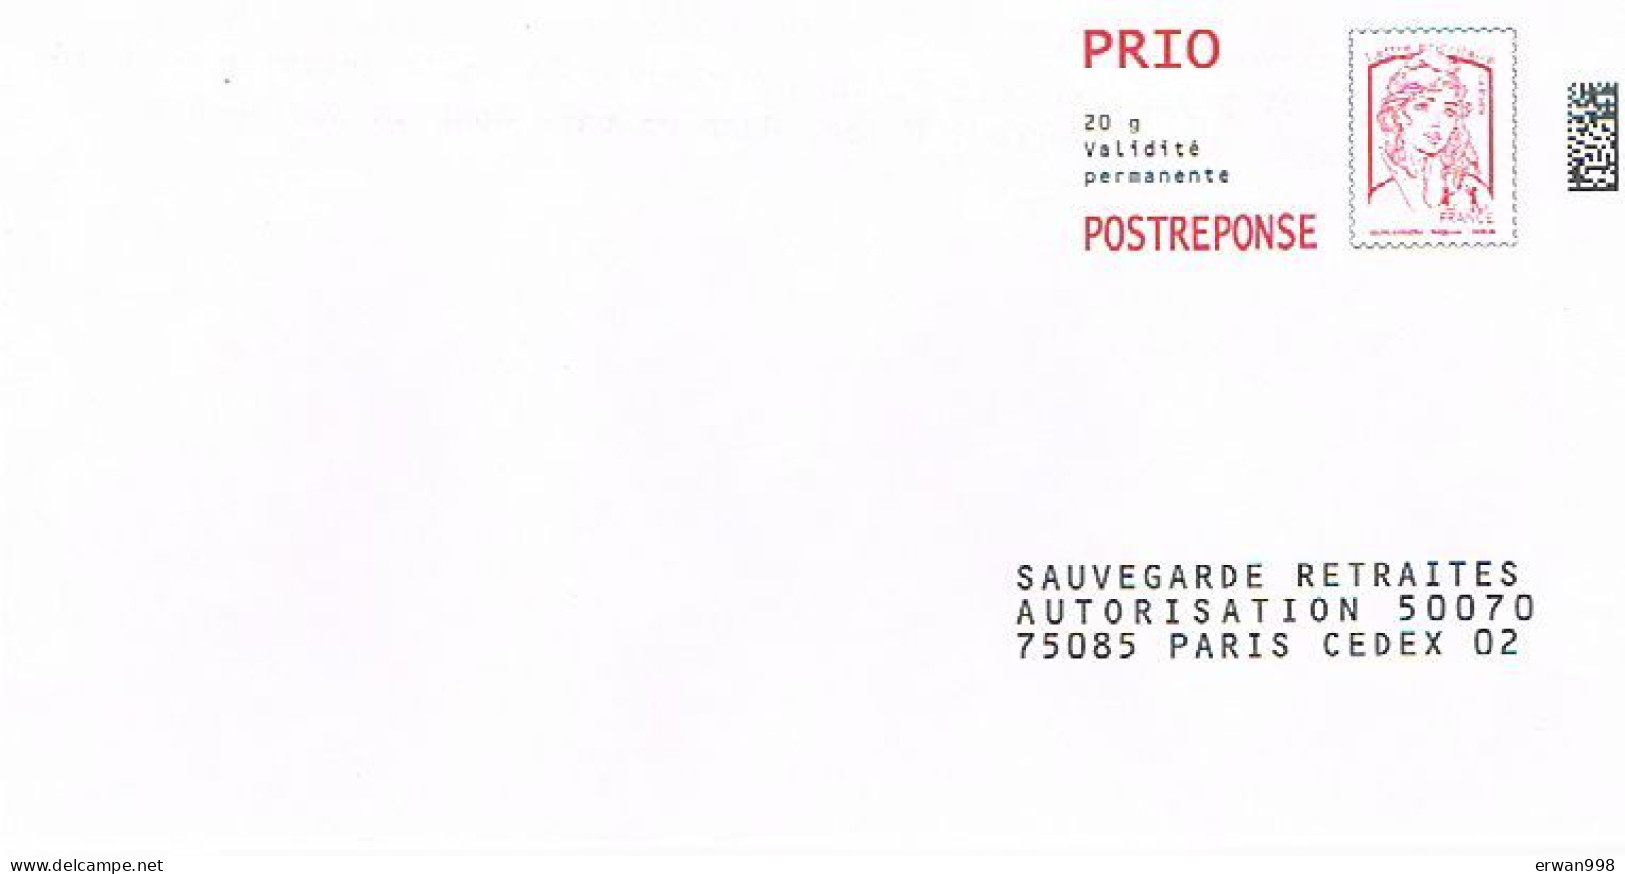 75 PARIS Postréponse SAUVEGARDE RETRAITE MARIANNE CIAPPA-KAWENA 14P264    (1270) - PAP : Antwoord /Ciappa-Kavena